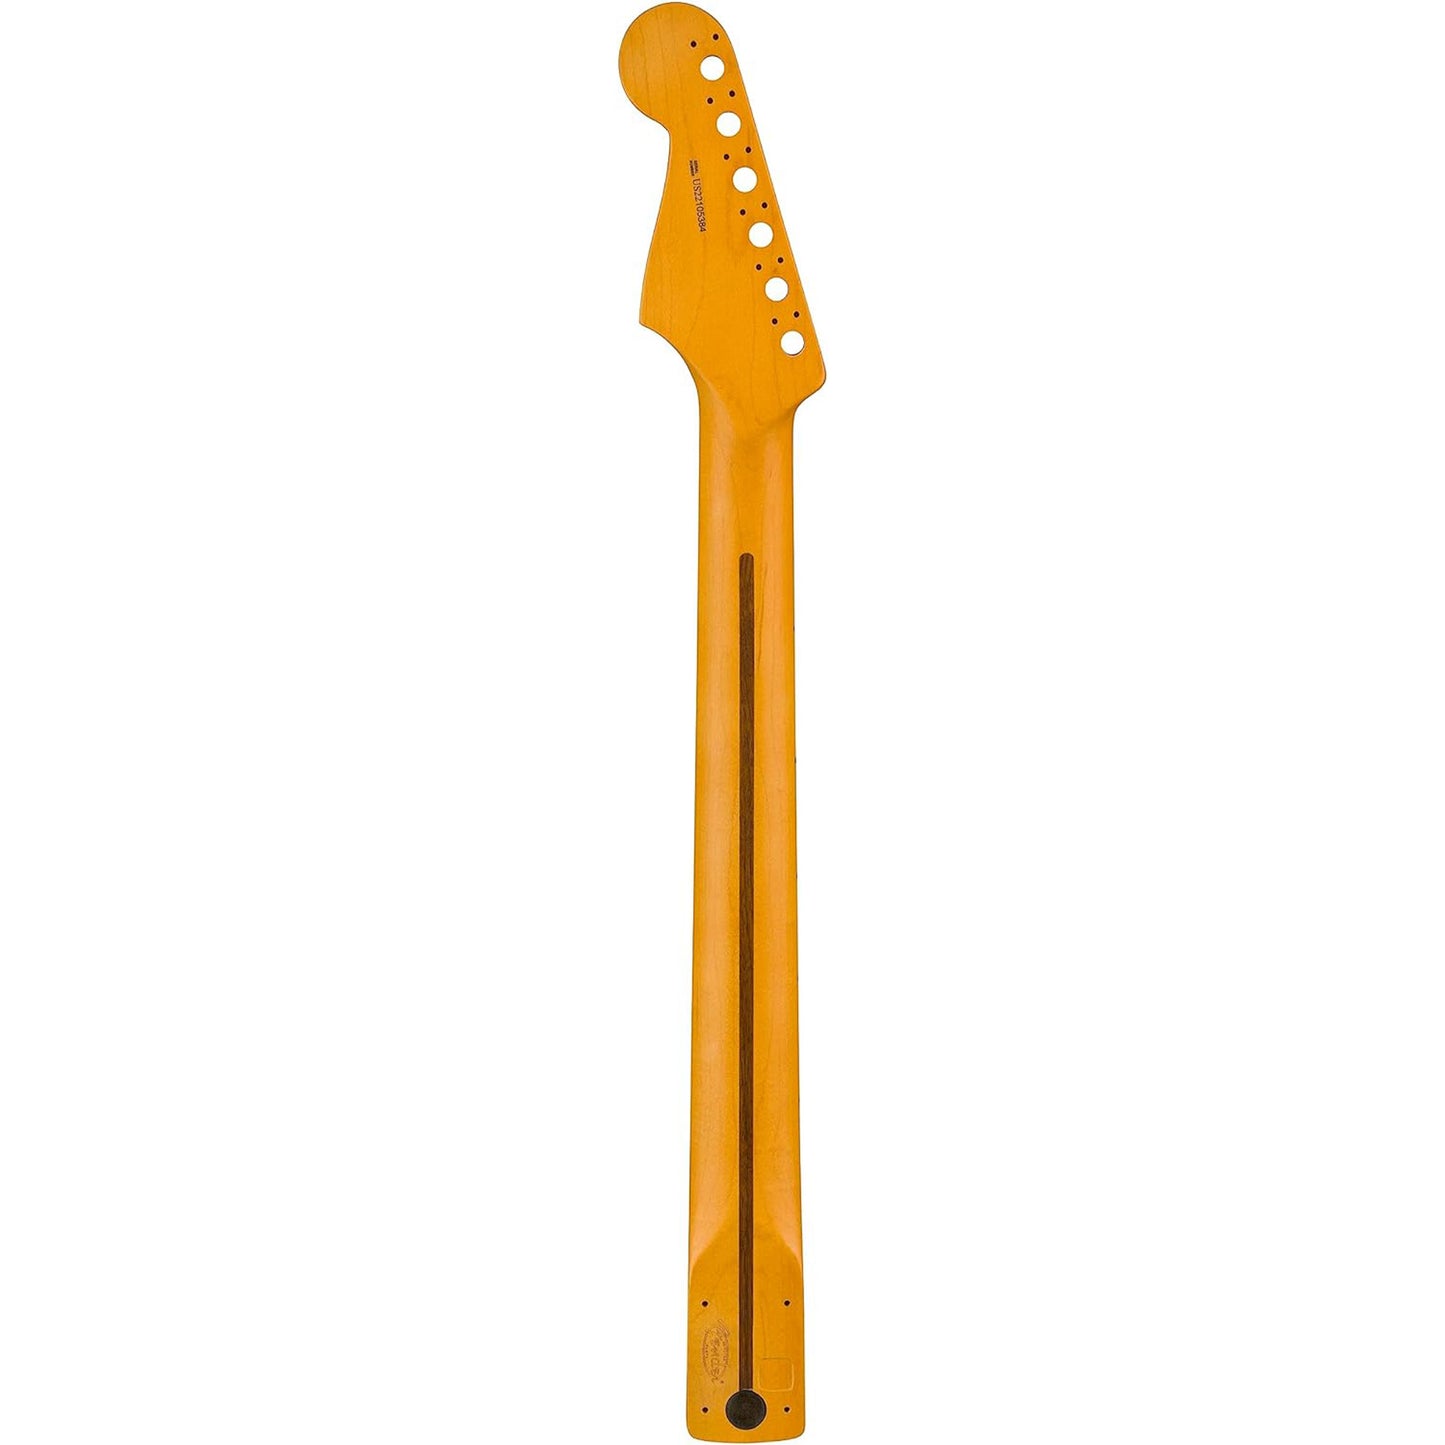 Fender Fender American Professional II Stratocaster Neck - Scalloped Maple Fingerboard